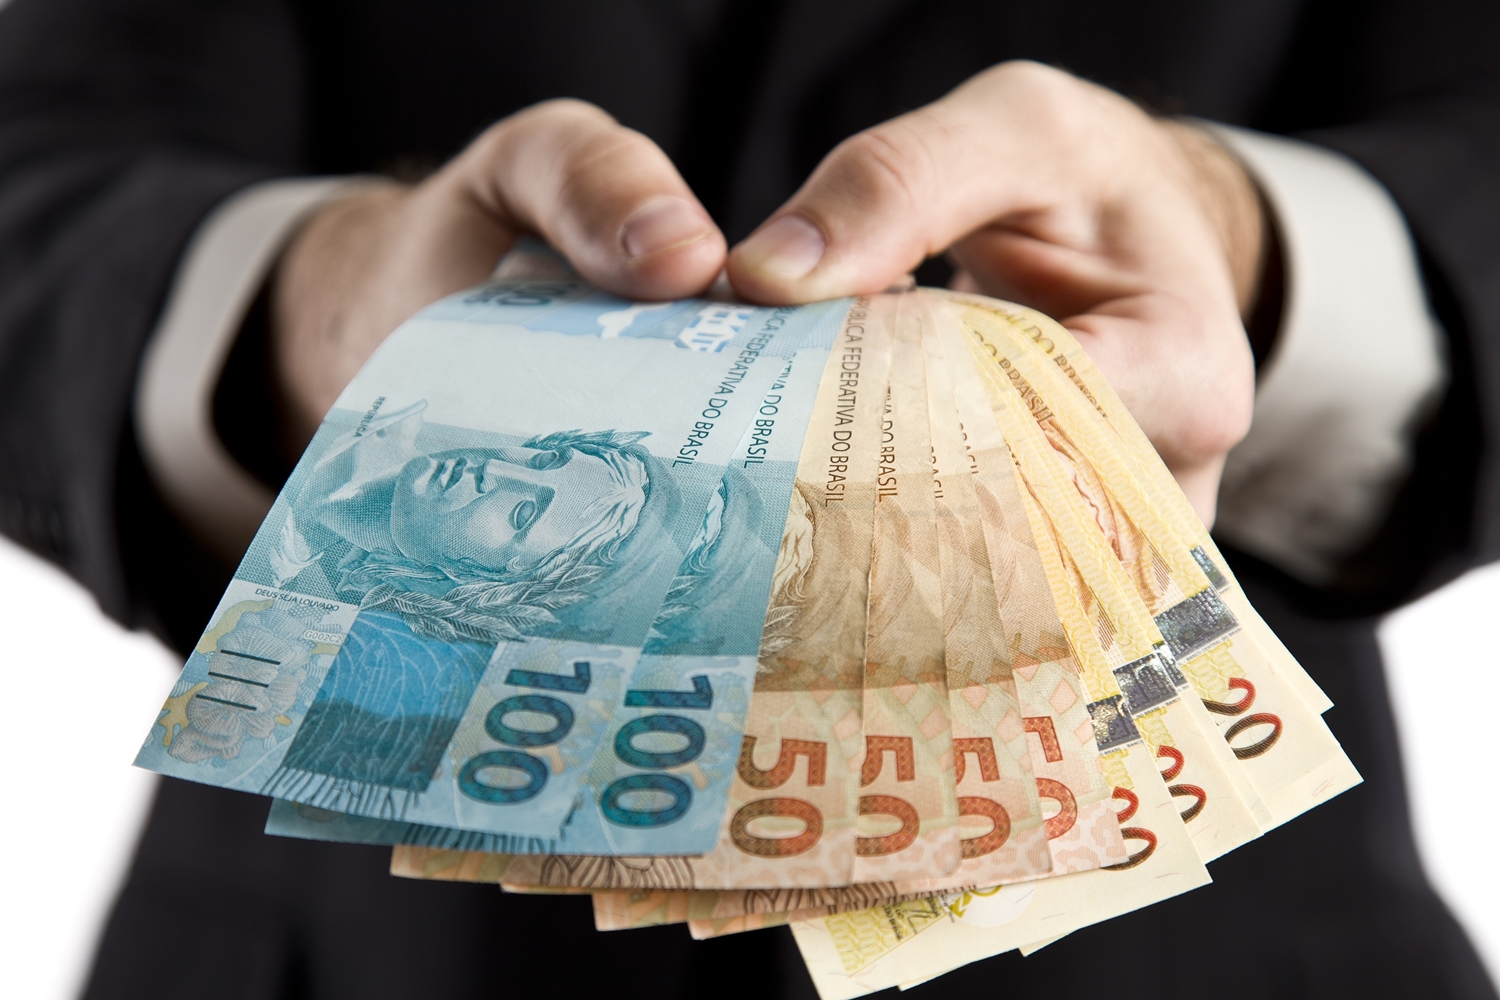 Salário mínimo ideal já passa de R$ 4 mil, diz Dieese